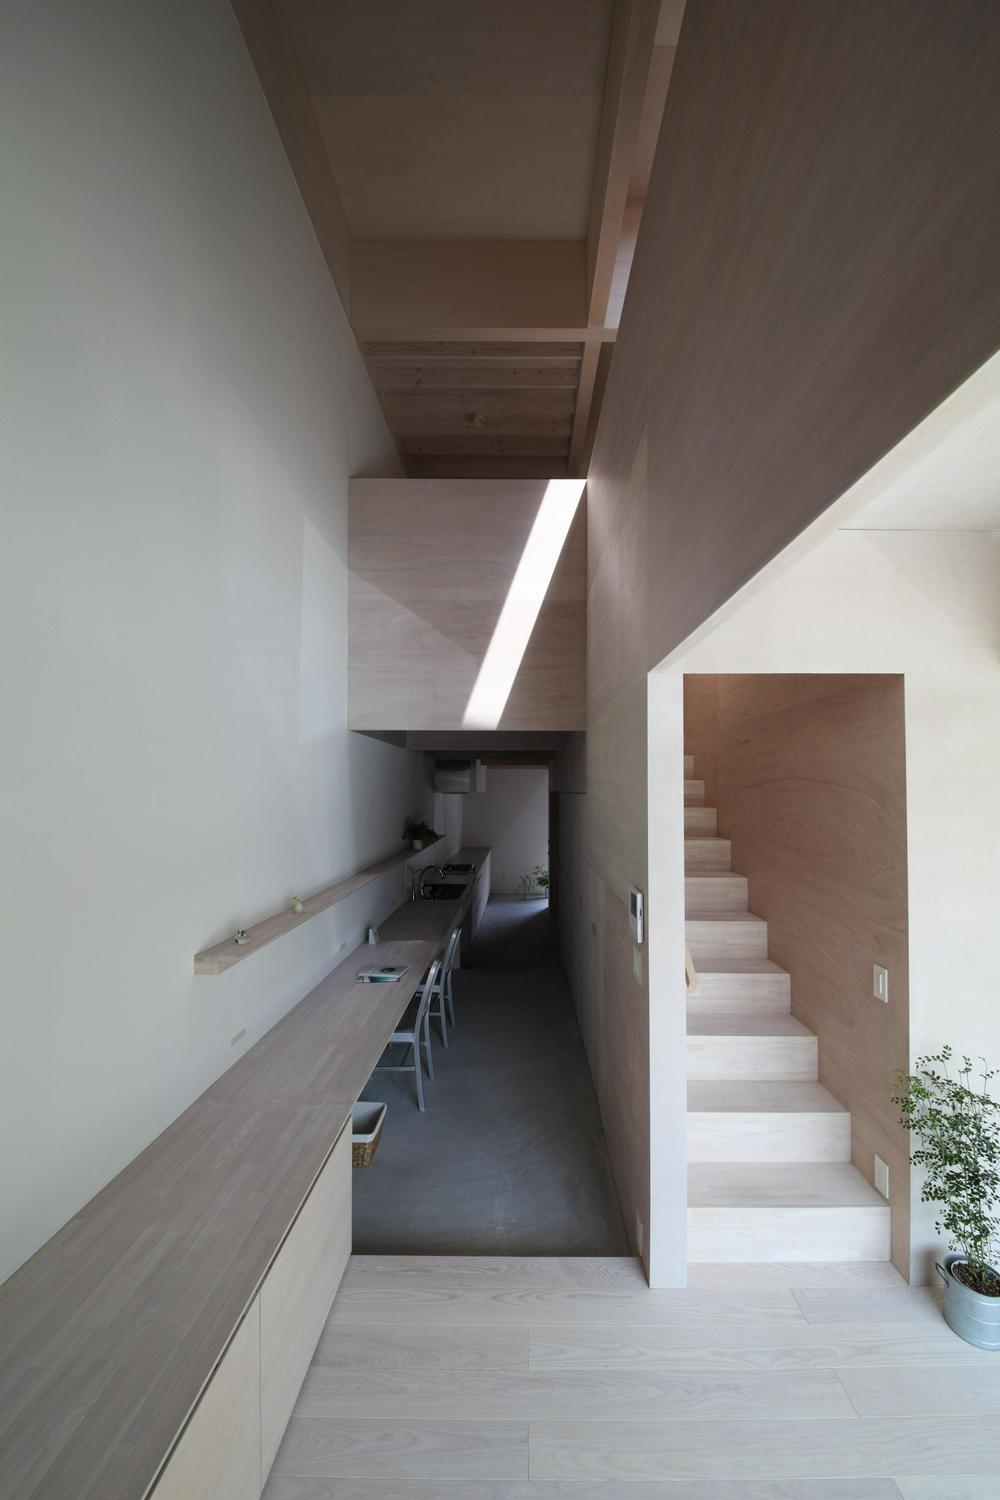 Image of "羽根北の家", the work by architect : Katsutoshi Sasaki (image number 4)